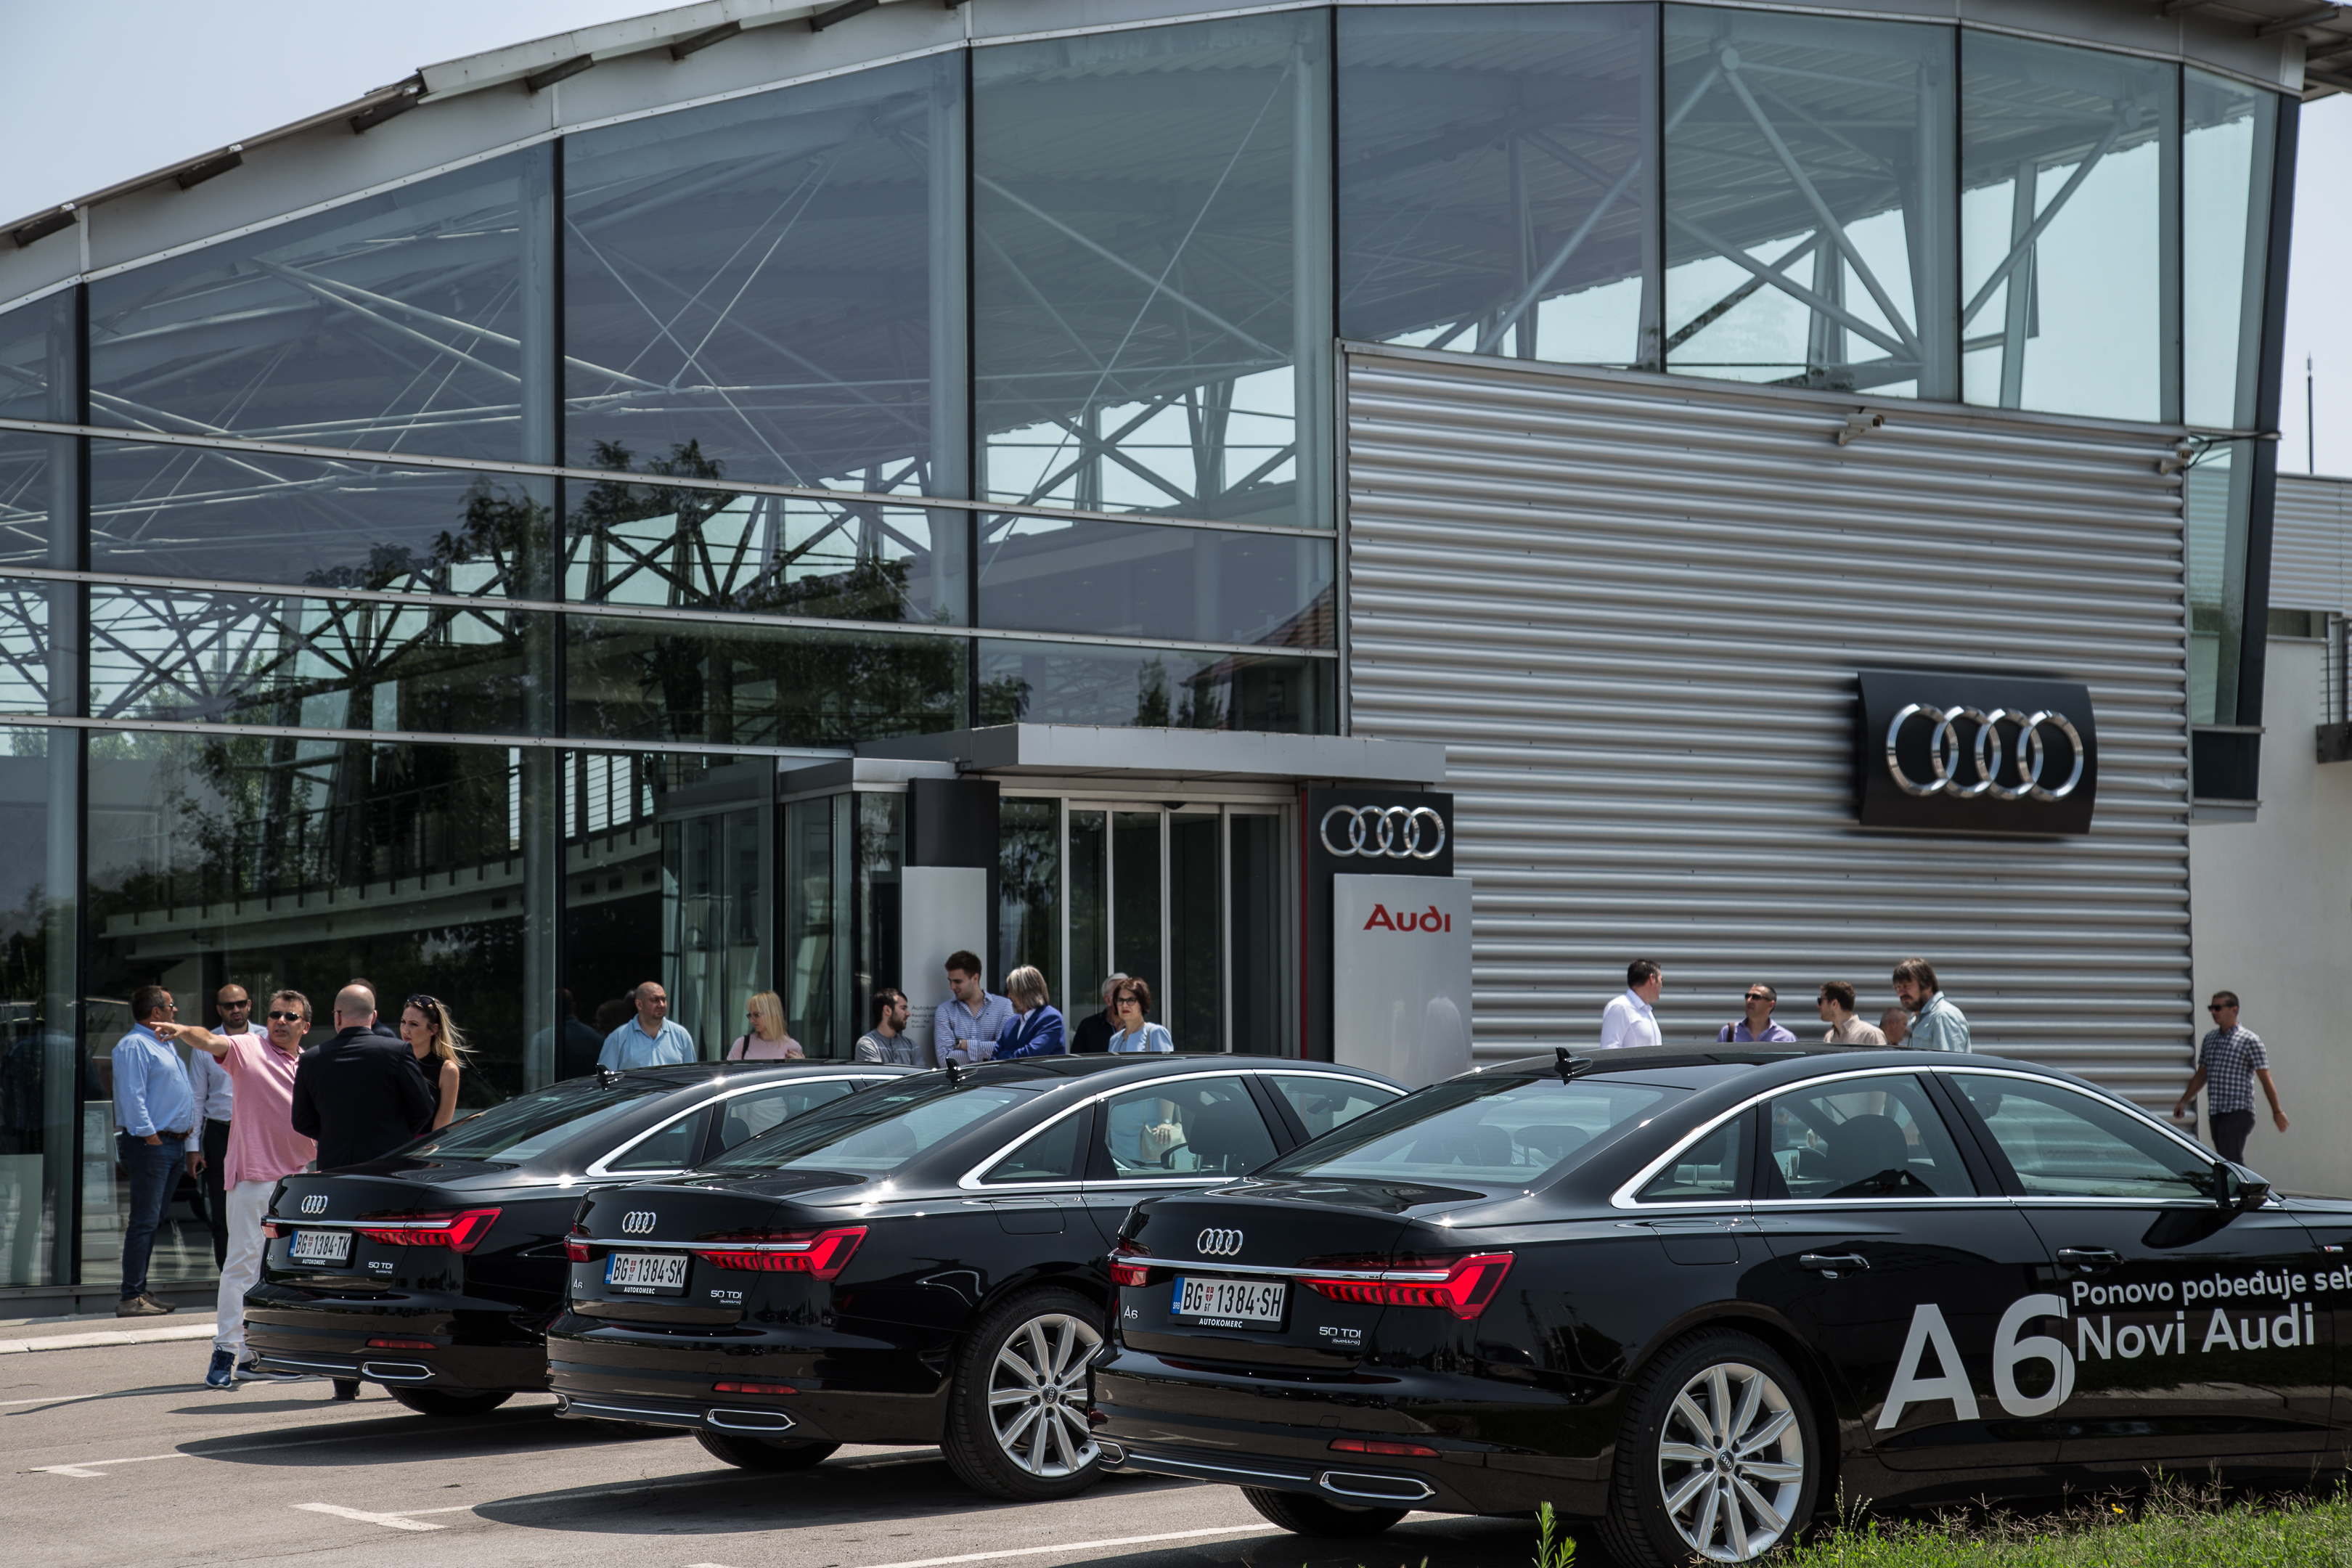 Autokomerc Centar Aerodrom organizovao ekskluzivnu promociju nove limuzine Audi A6